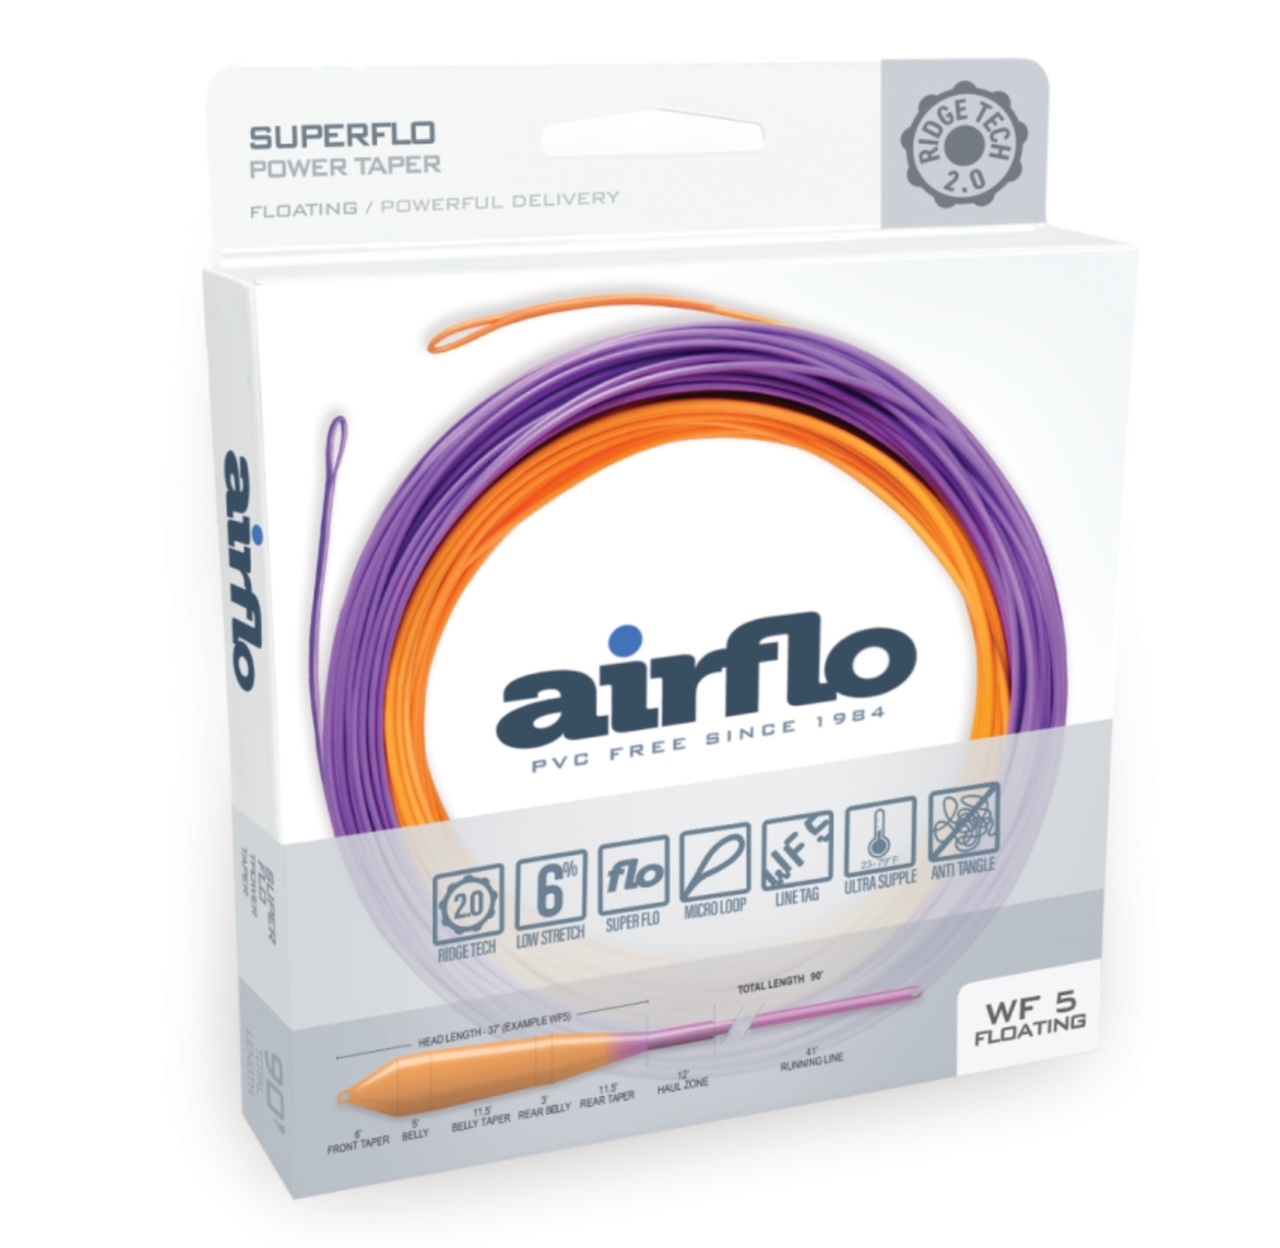 Airflo Ridge 2.0 Superflo Power Taper - WF3F - Sunburst/Purple